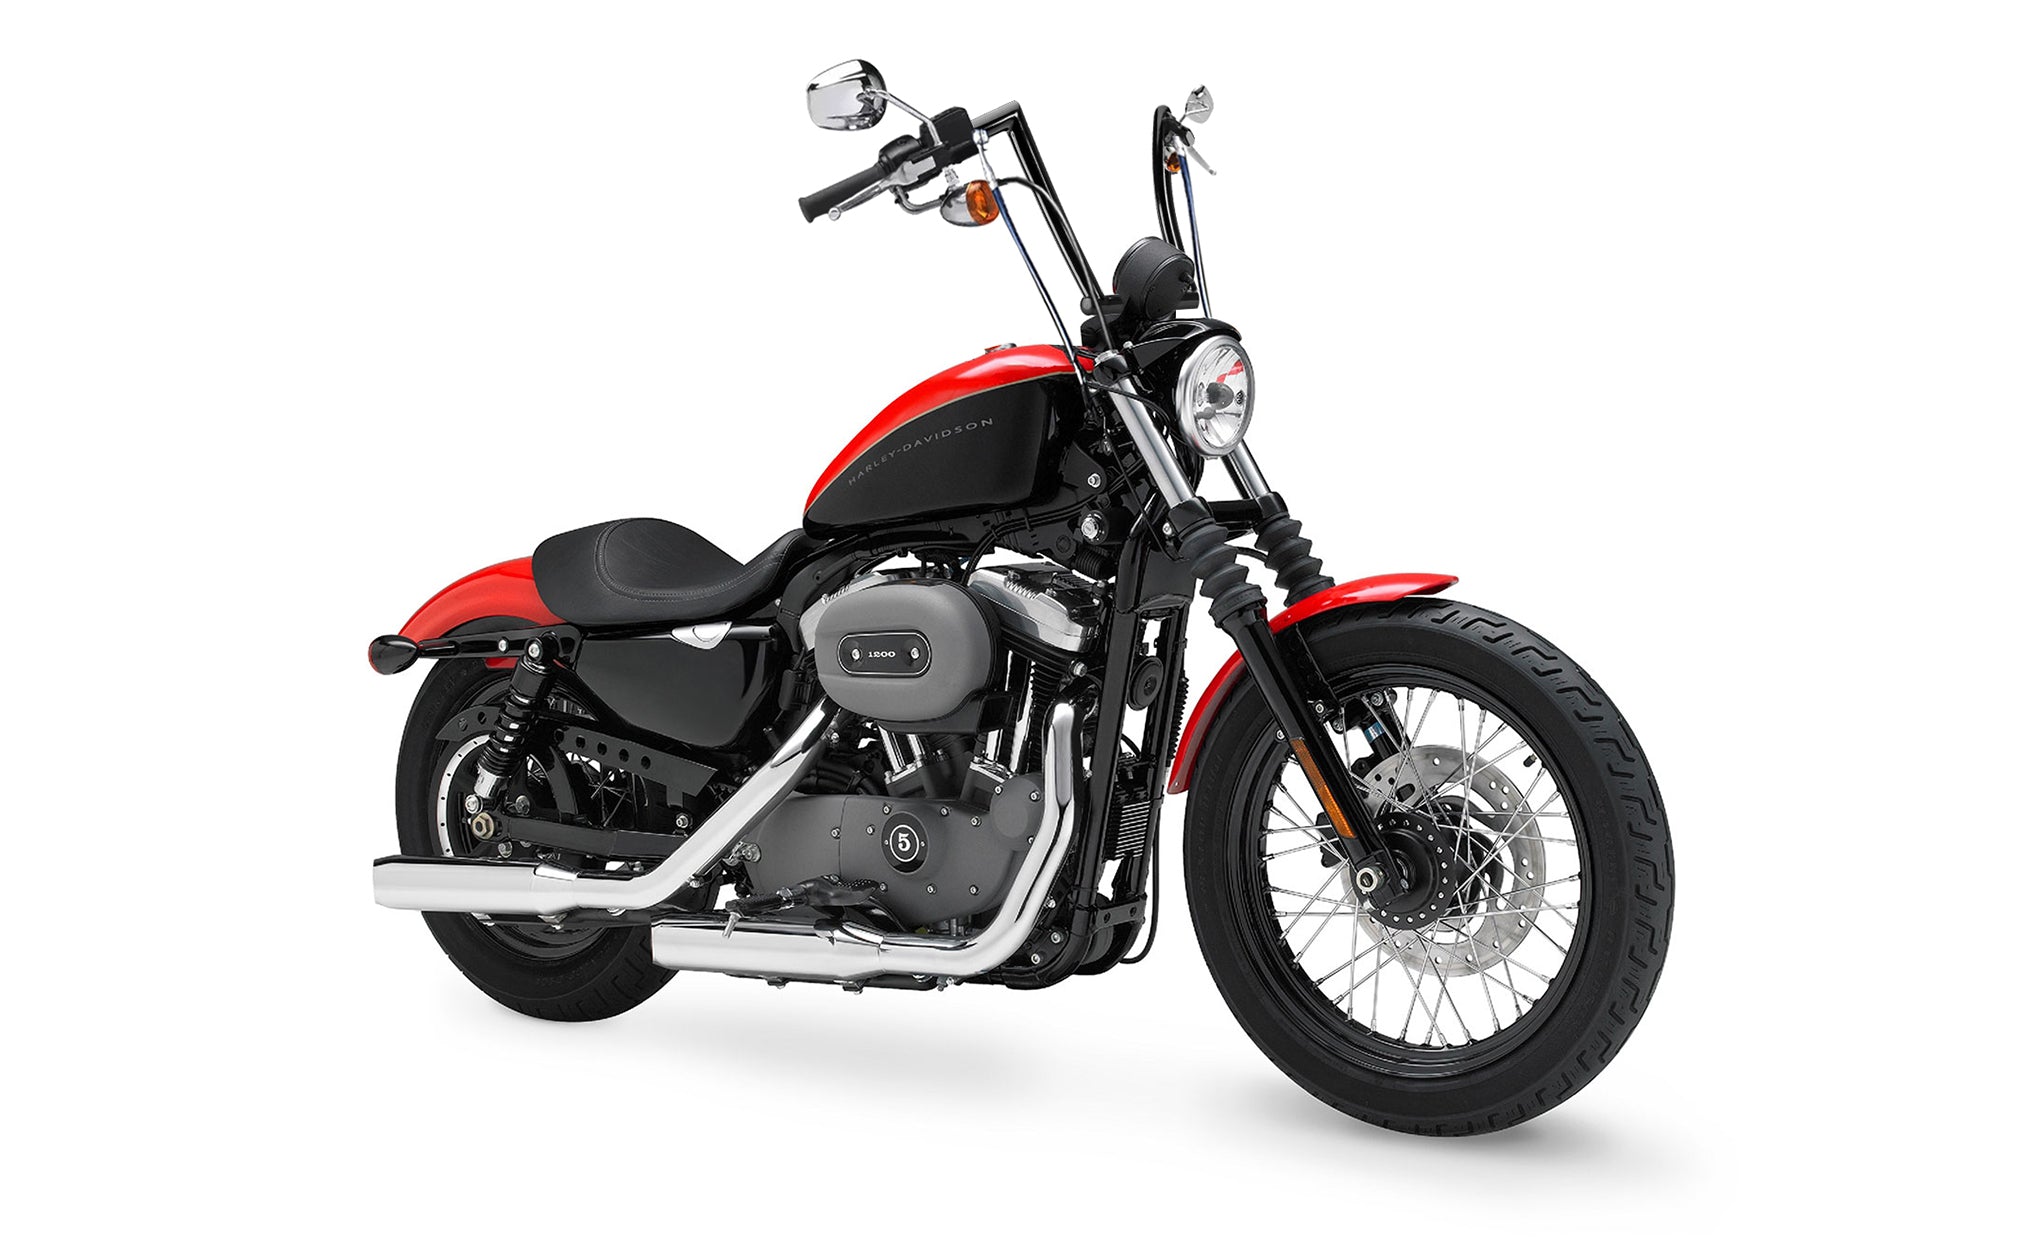 Viking Iron Born 9" Handlebar For Harley Sportster 1200 Nightster XL1200N Gloss Black Bag on Bike View @expand